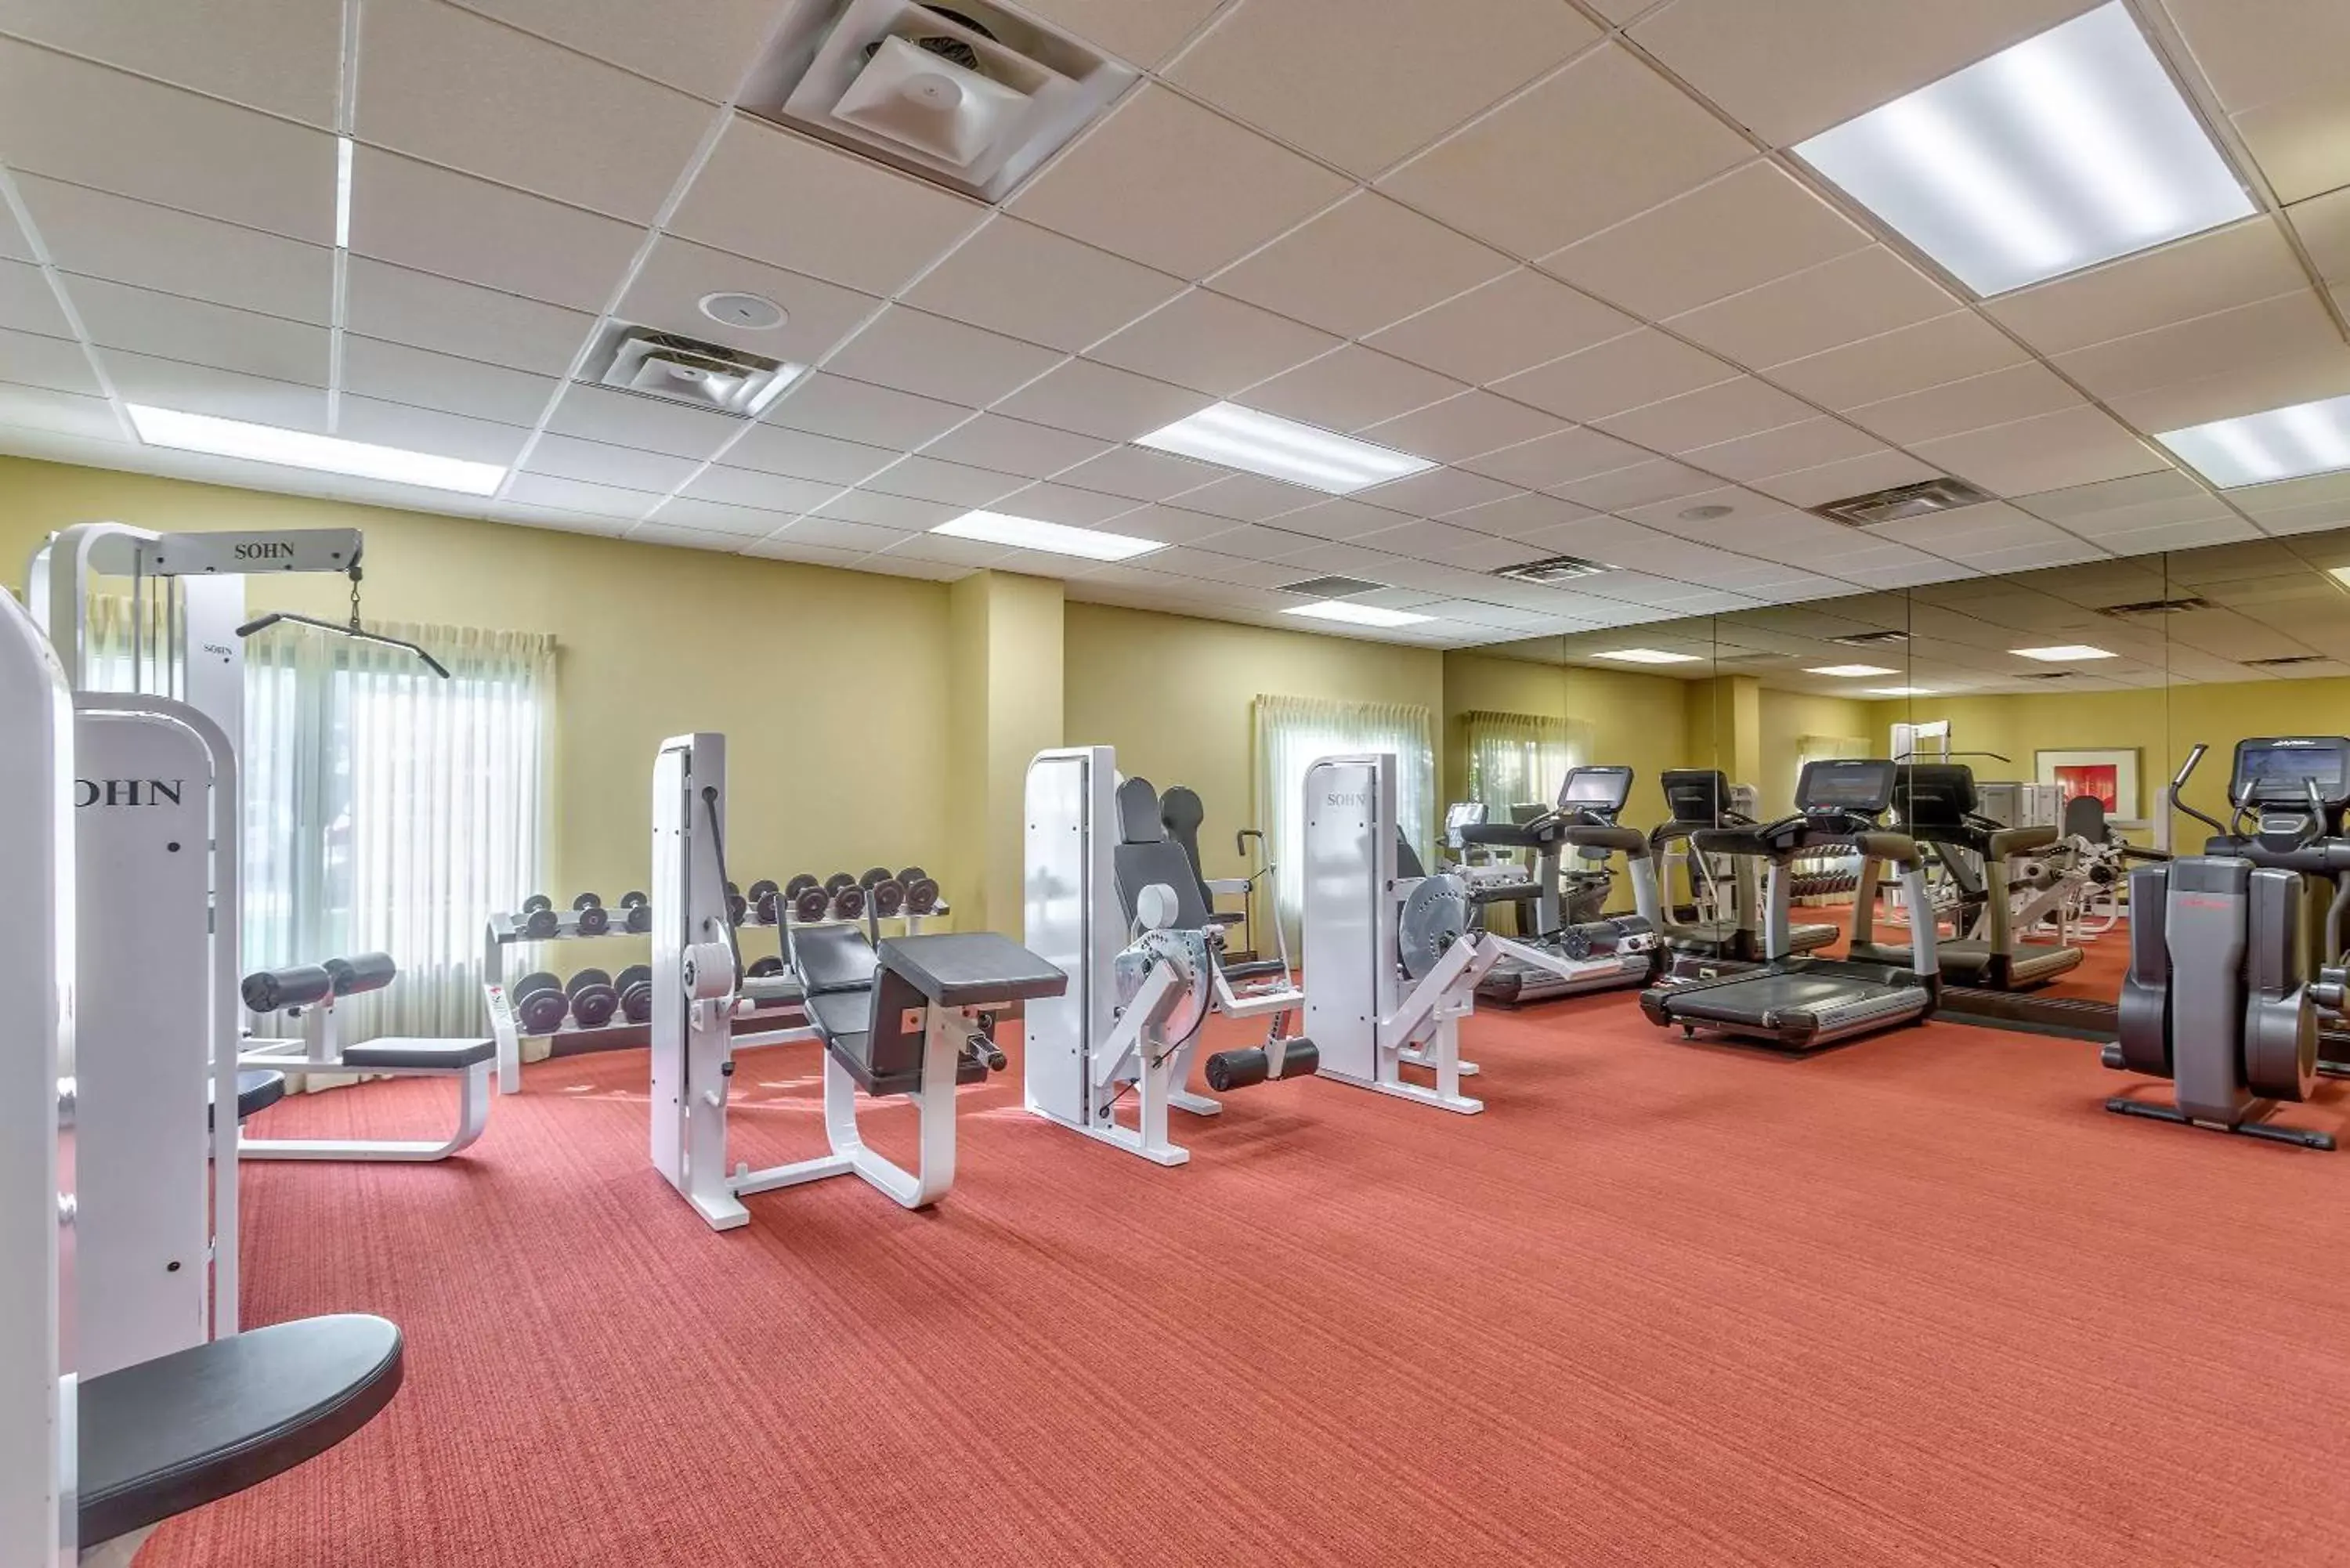 Fitness centre/facilities, Fitness Center/Facilities in Hyatt Place Kansas City/Overland Park/Convention Center